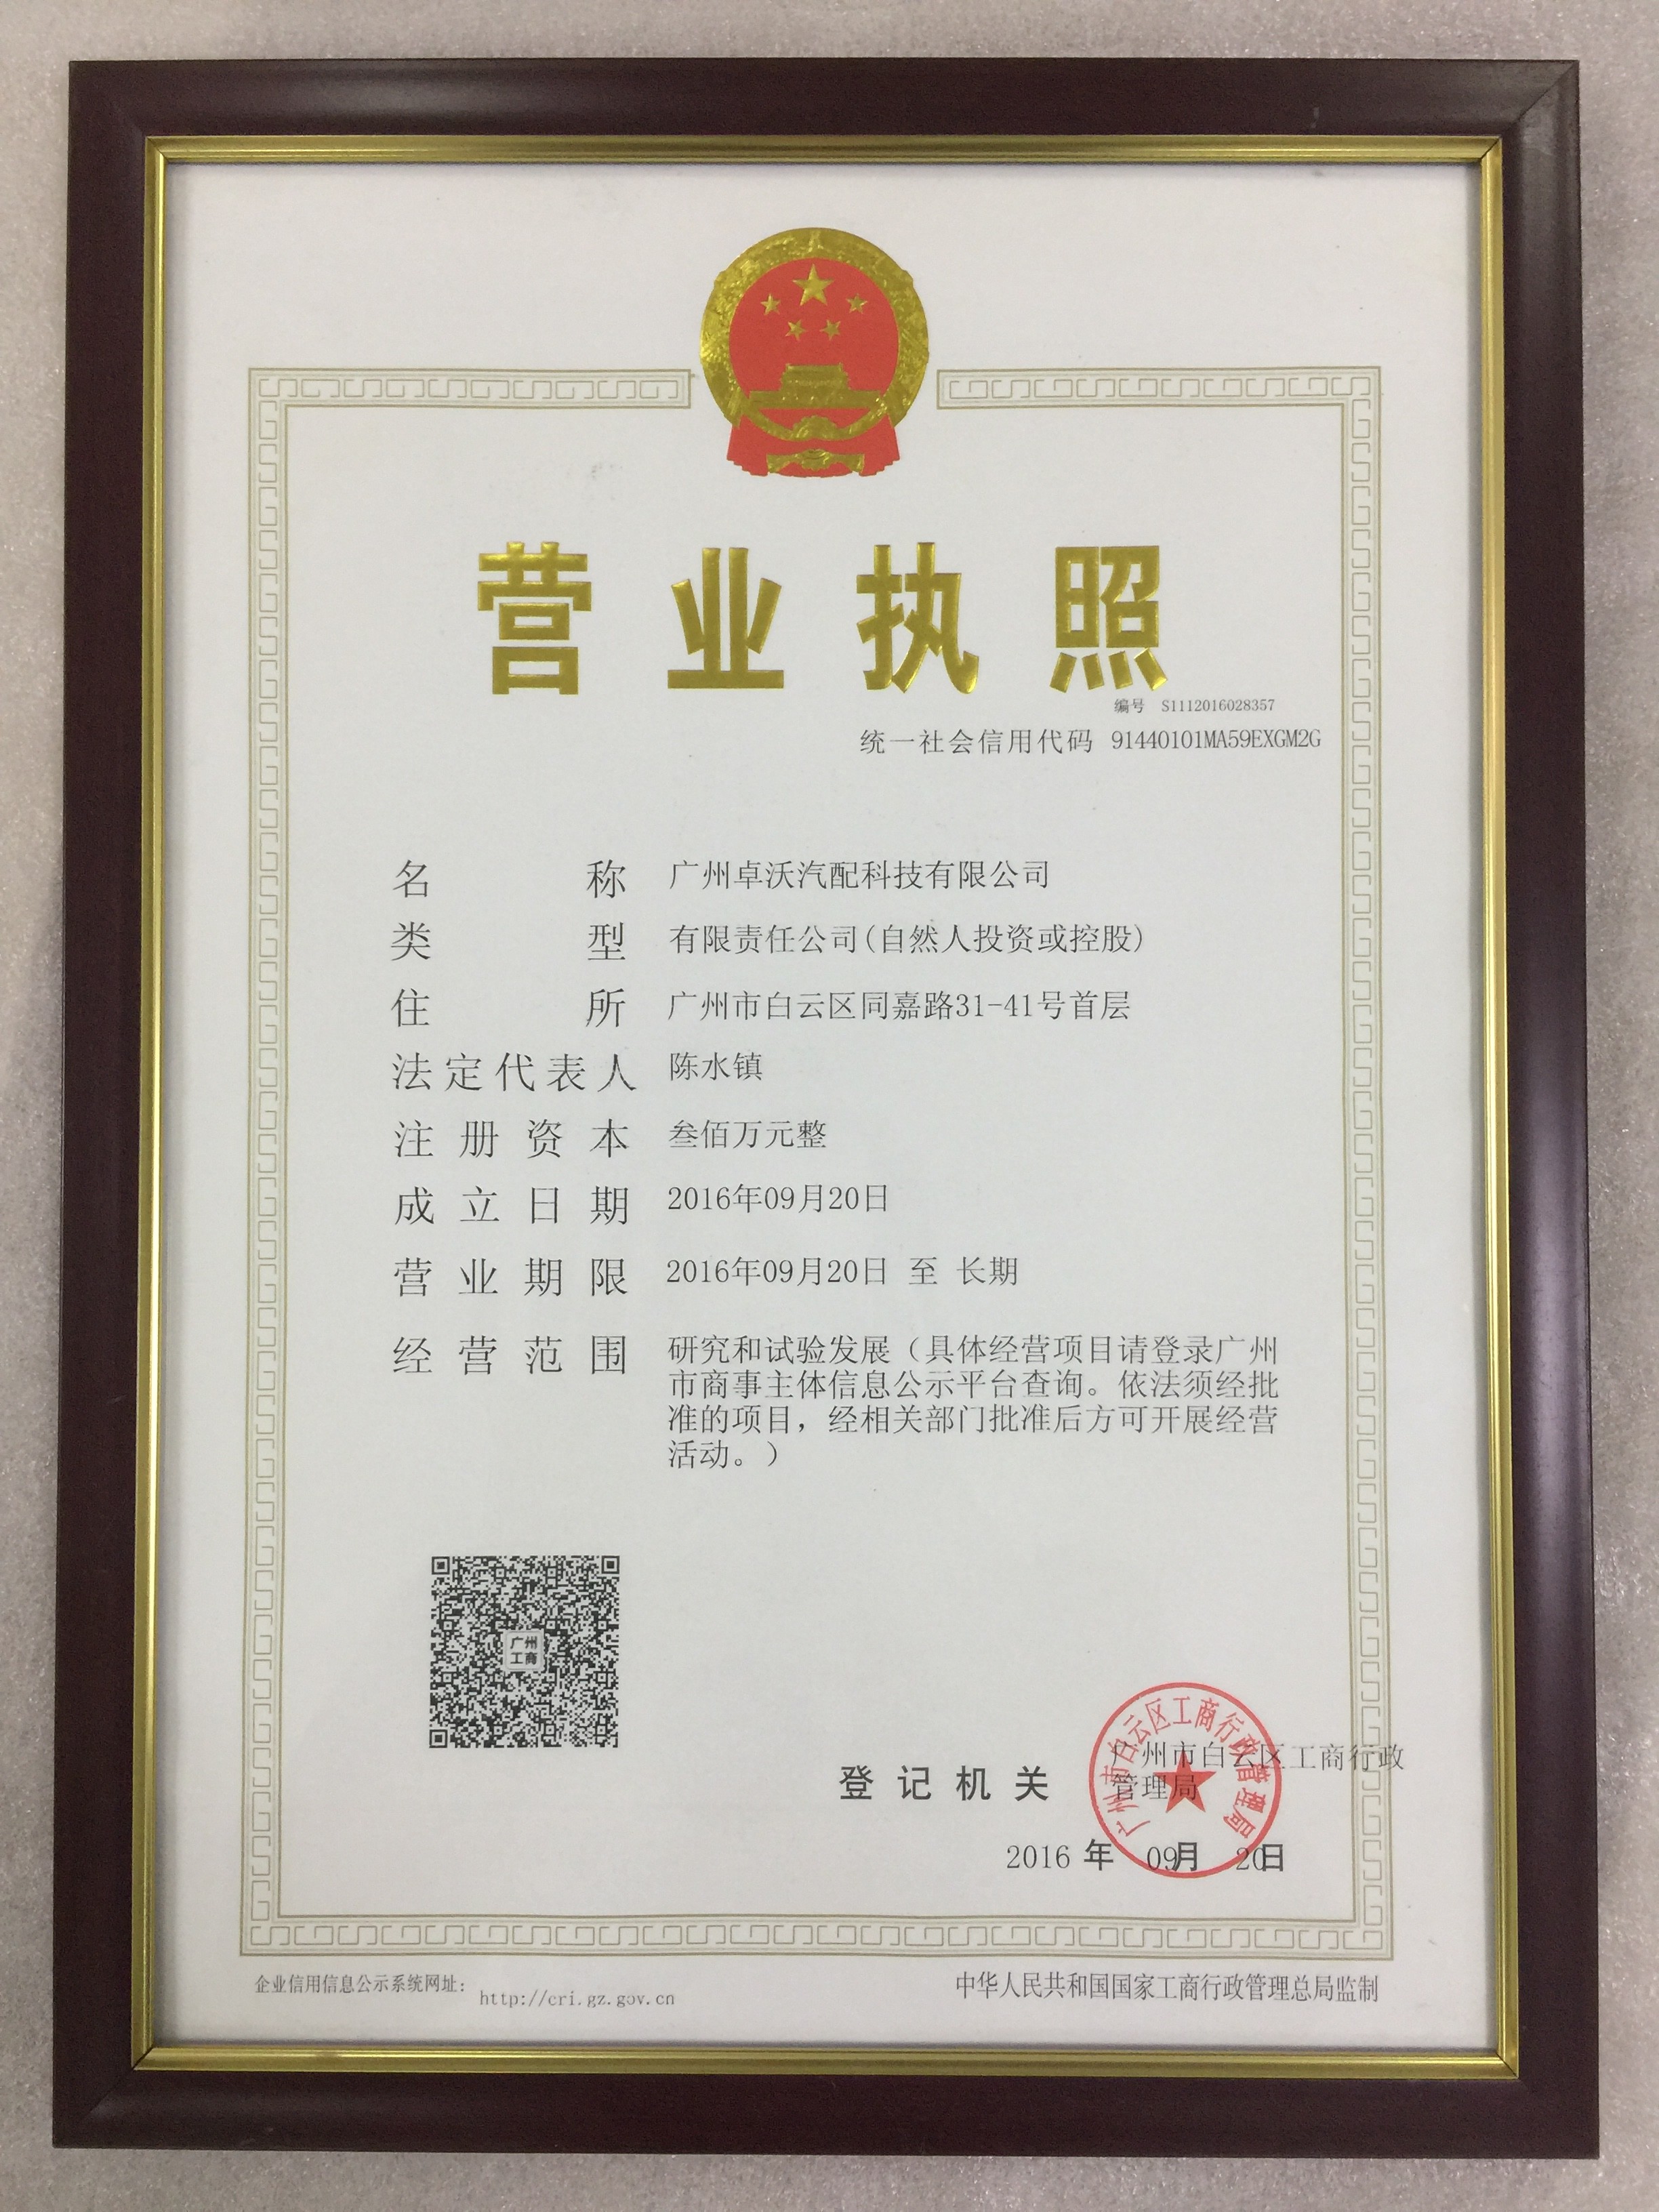 Guangzhou Jovoll Auto Parts Technology Co., Ltd. Certifications